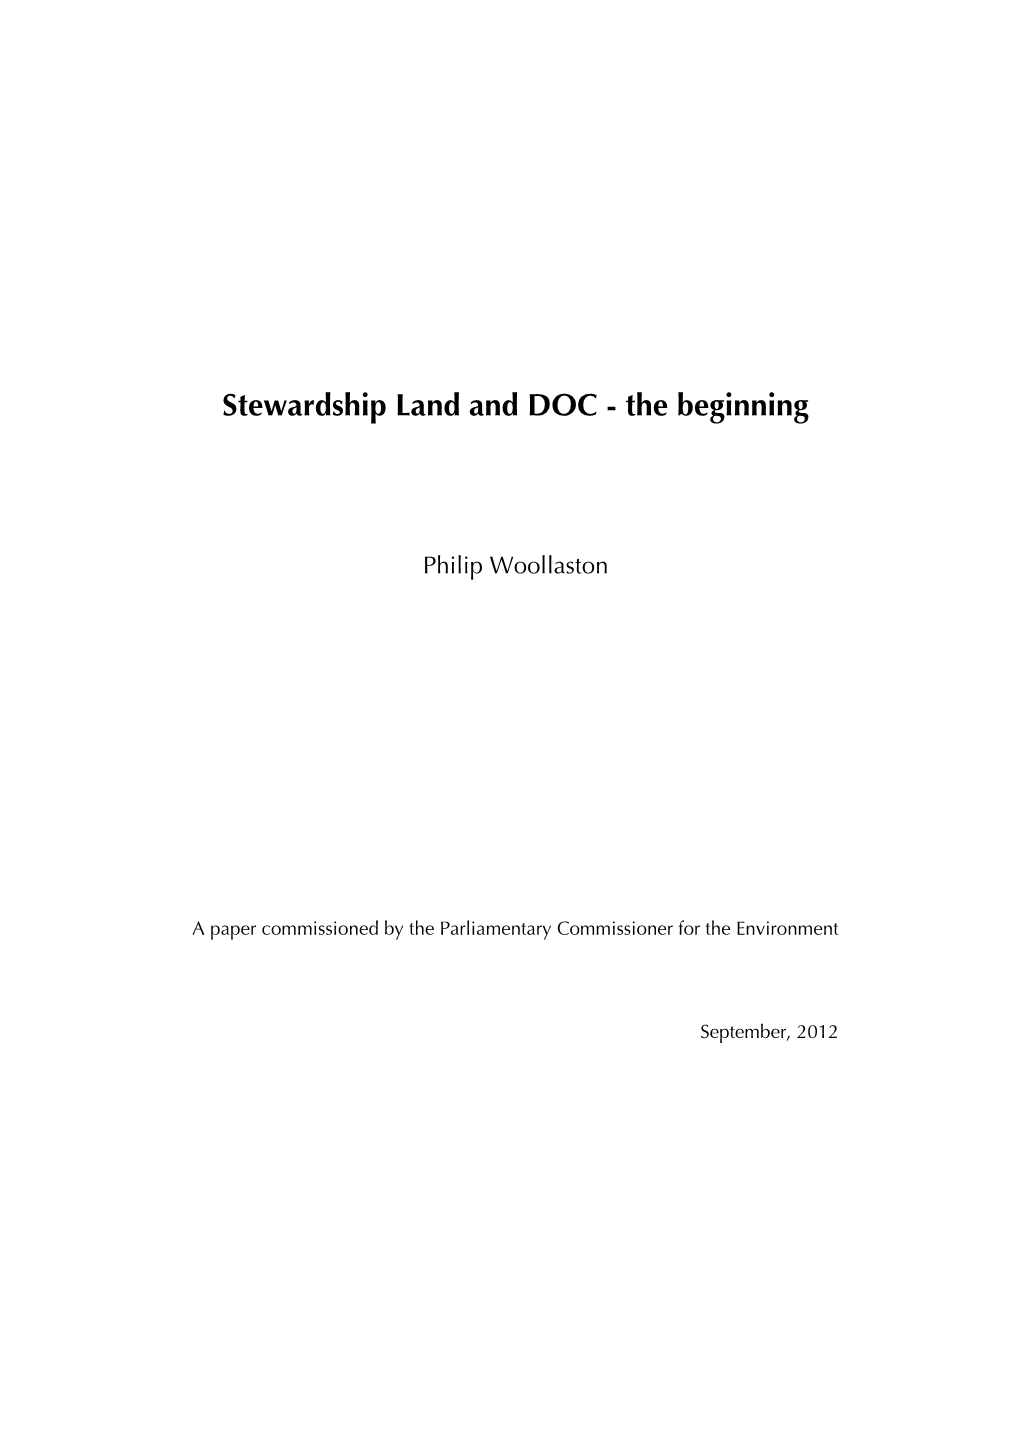 Stewardship Land and DOC - the Beginning